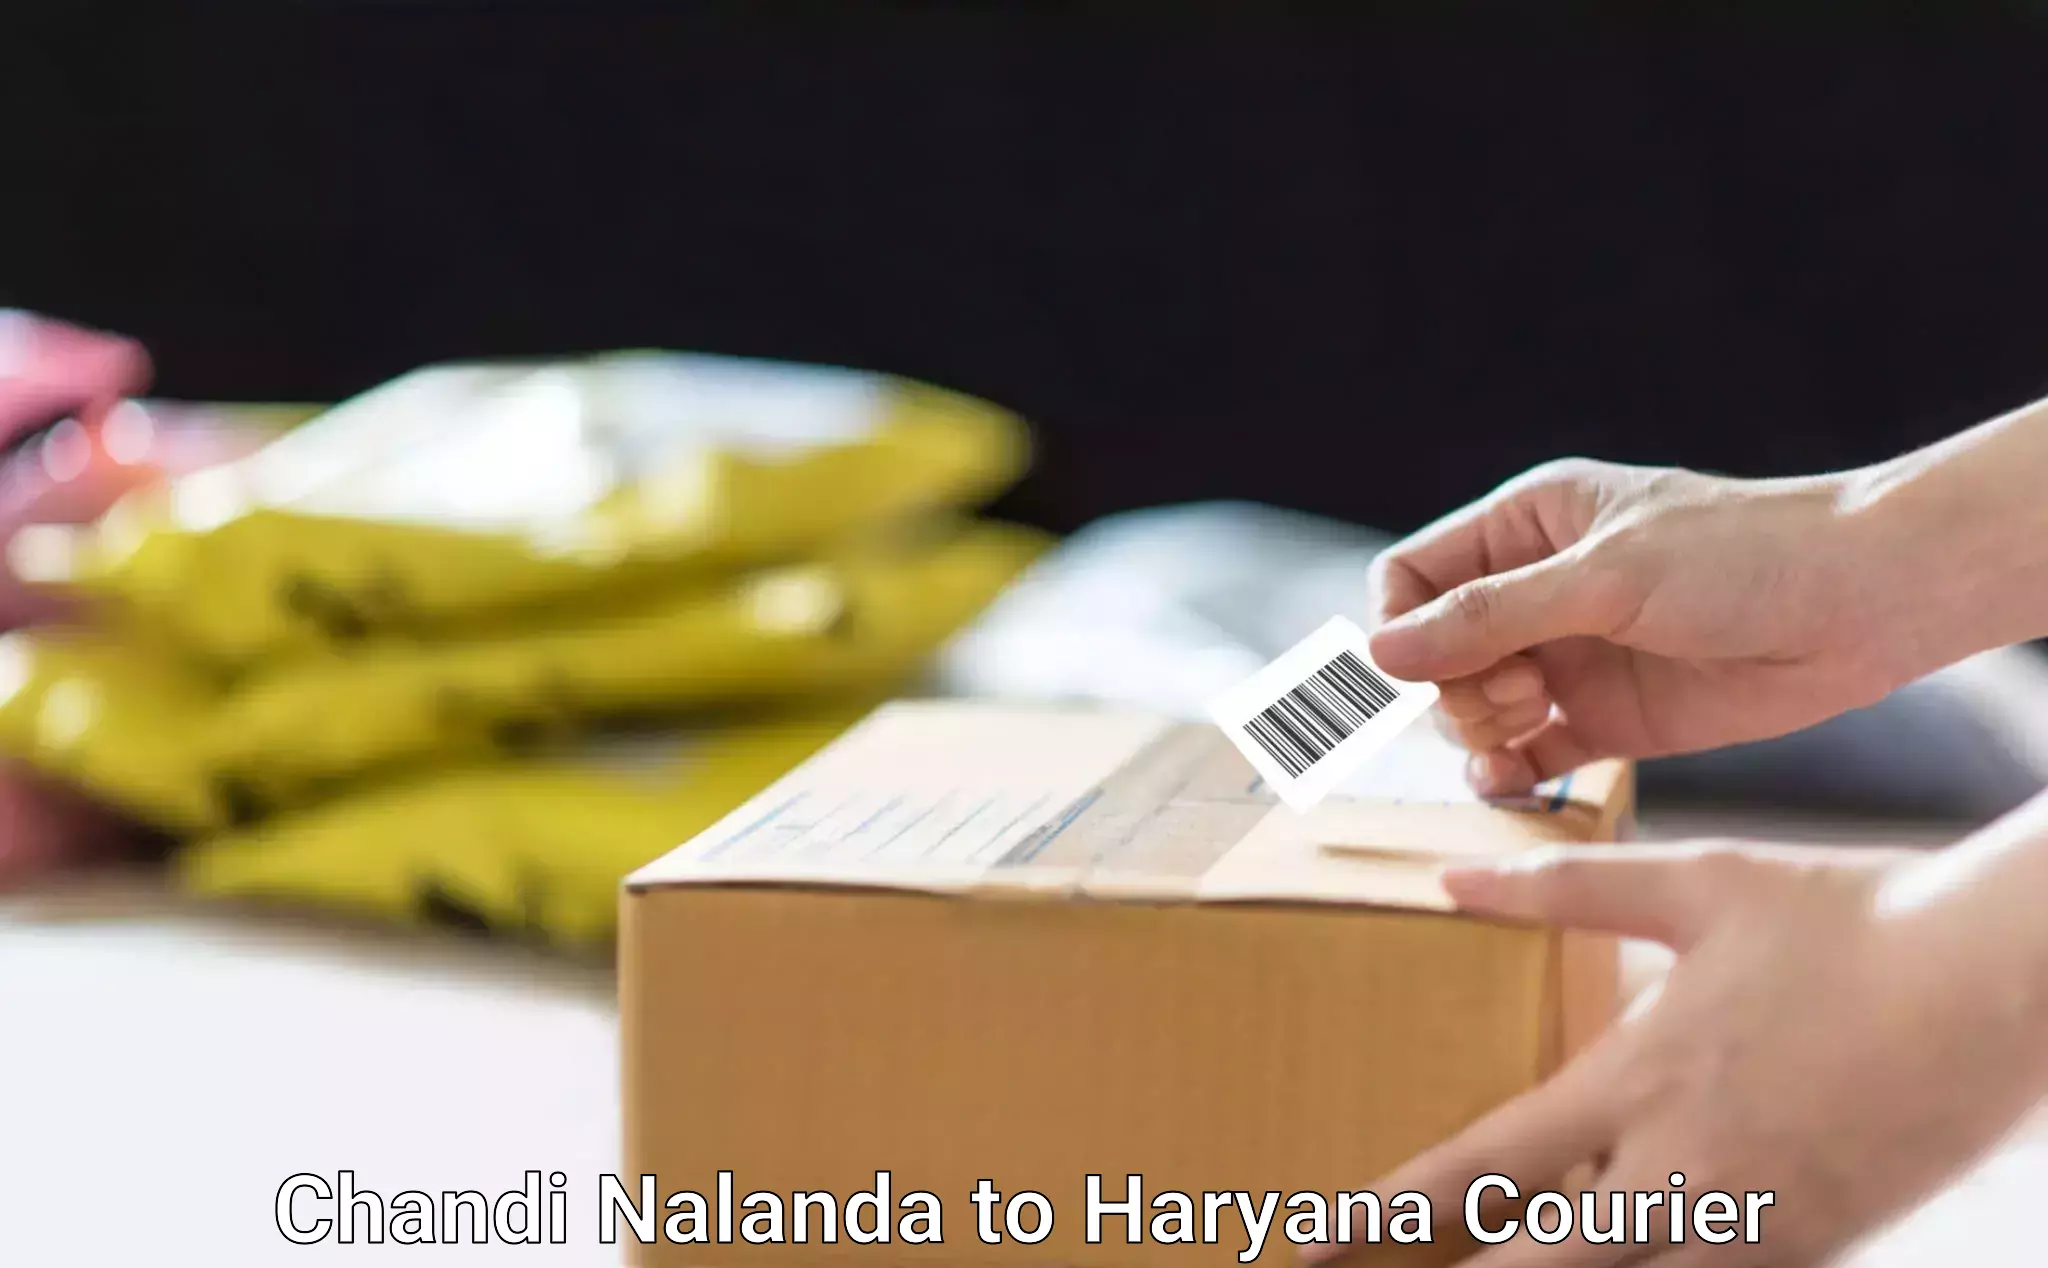 Furniture transport specialists Chandi Nalanda to Haryana